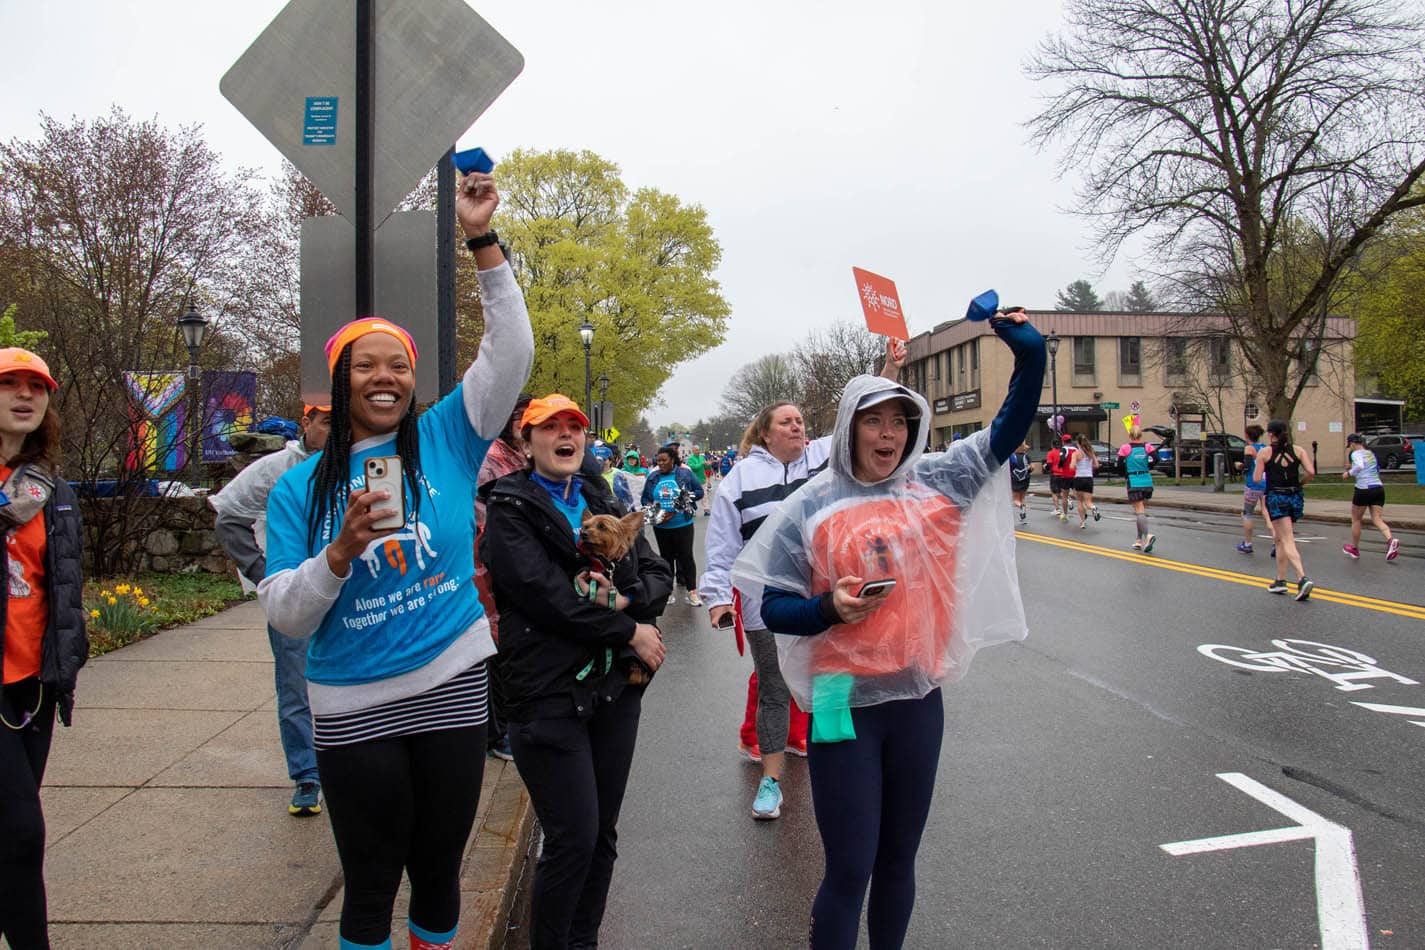 Boston marathon participants running together.